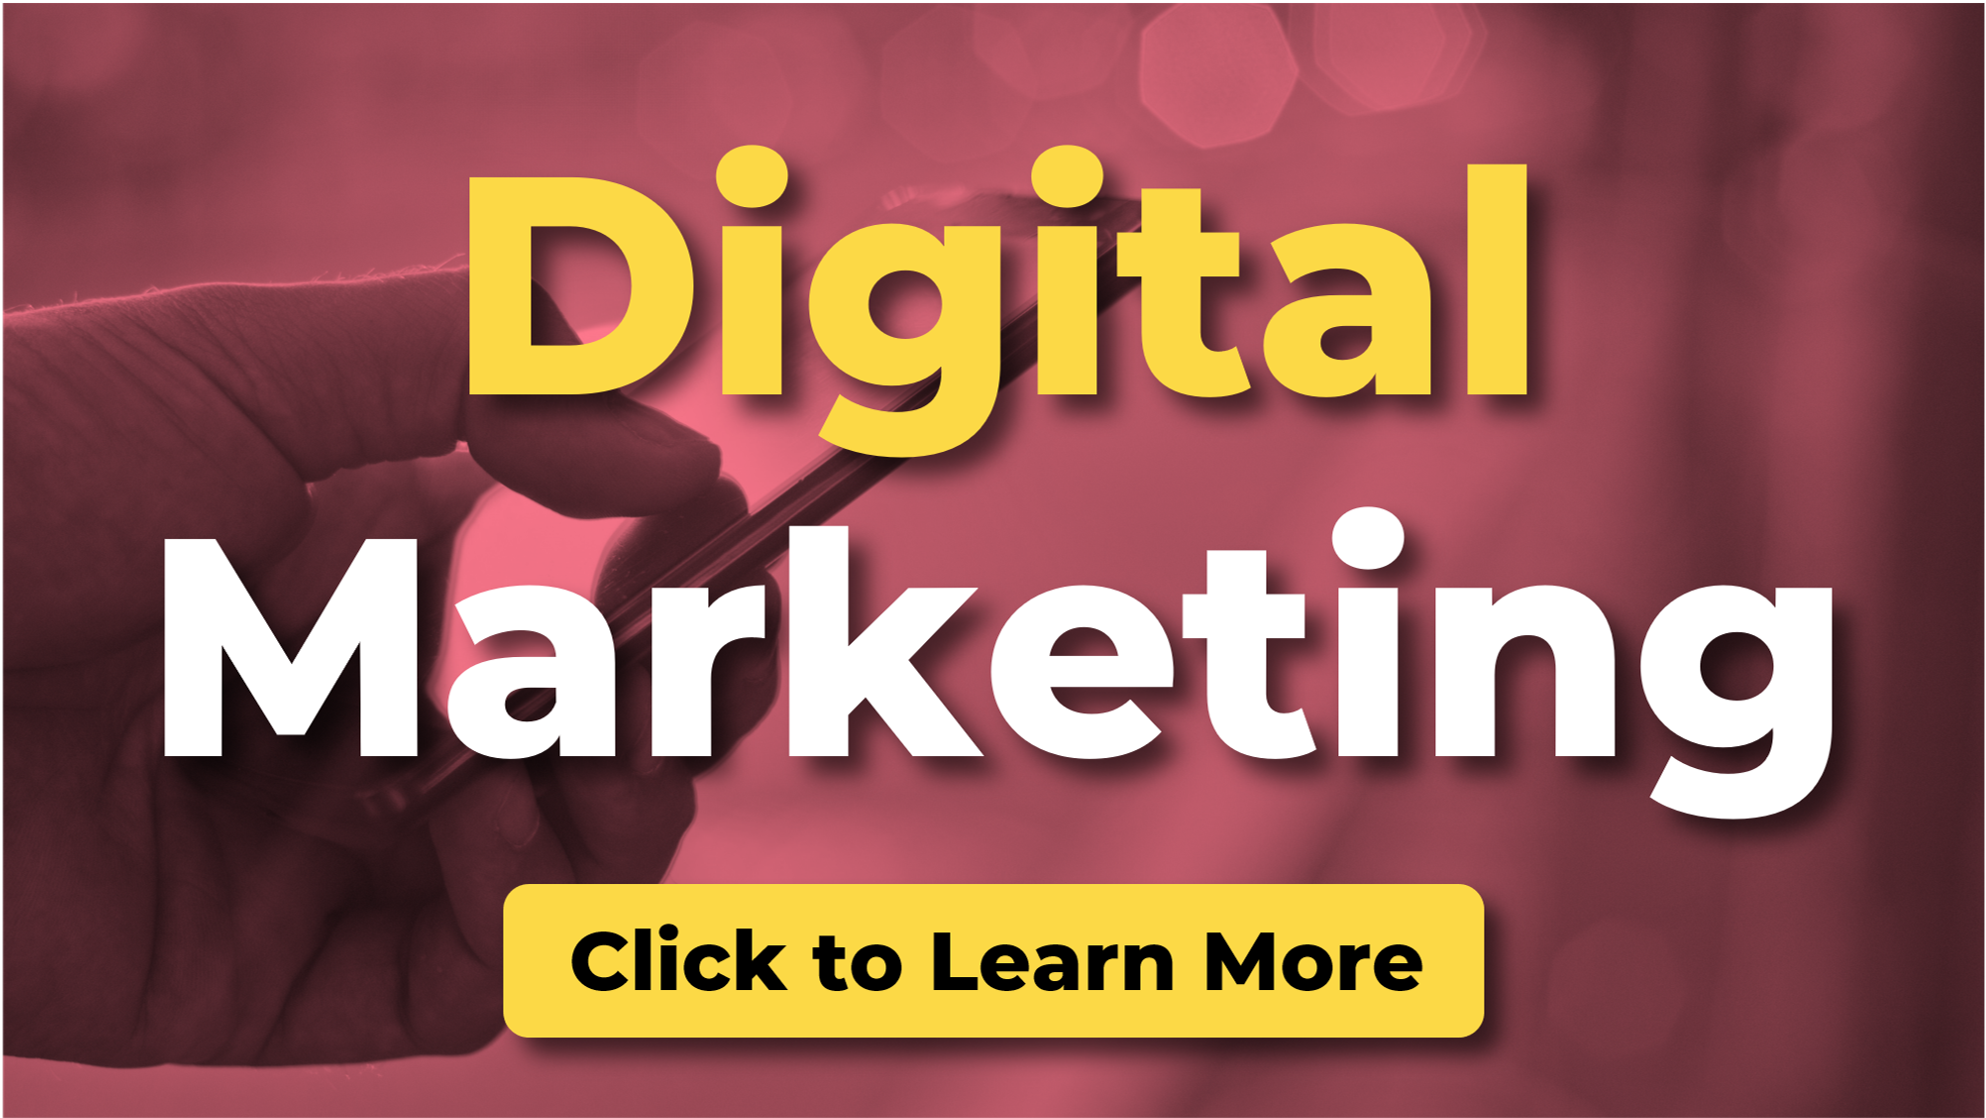 Affordable Digital Marketing - www.visualbreakthroughs.com